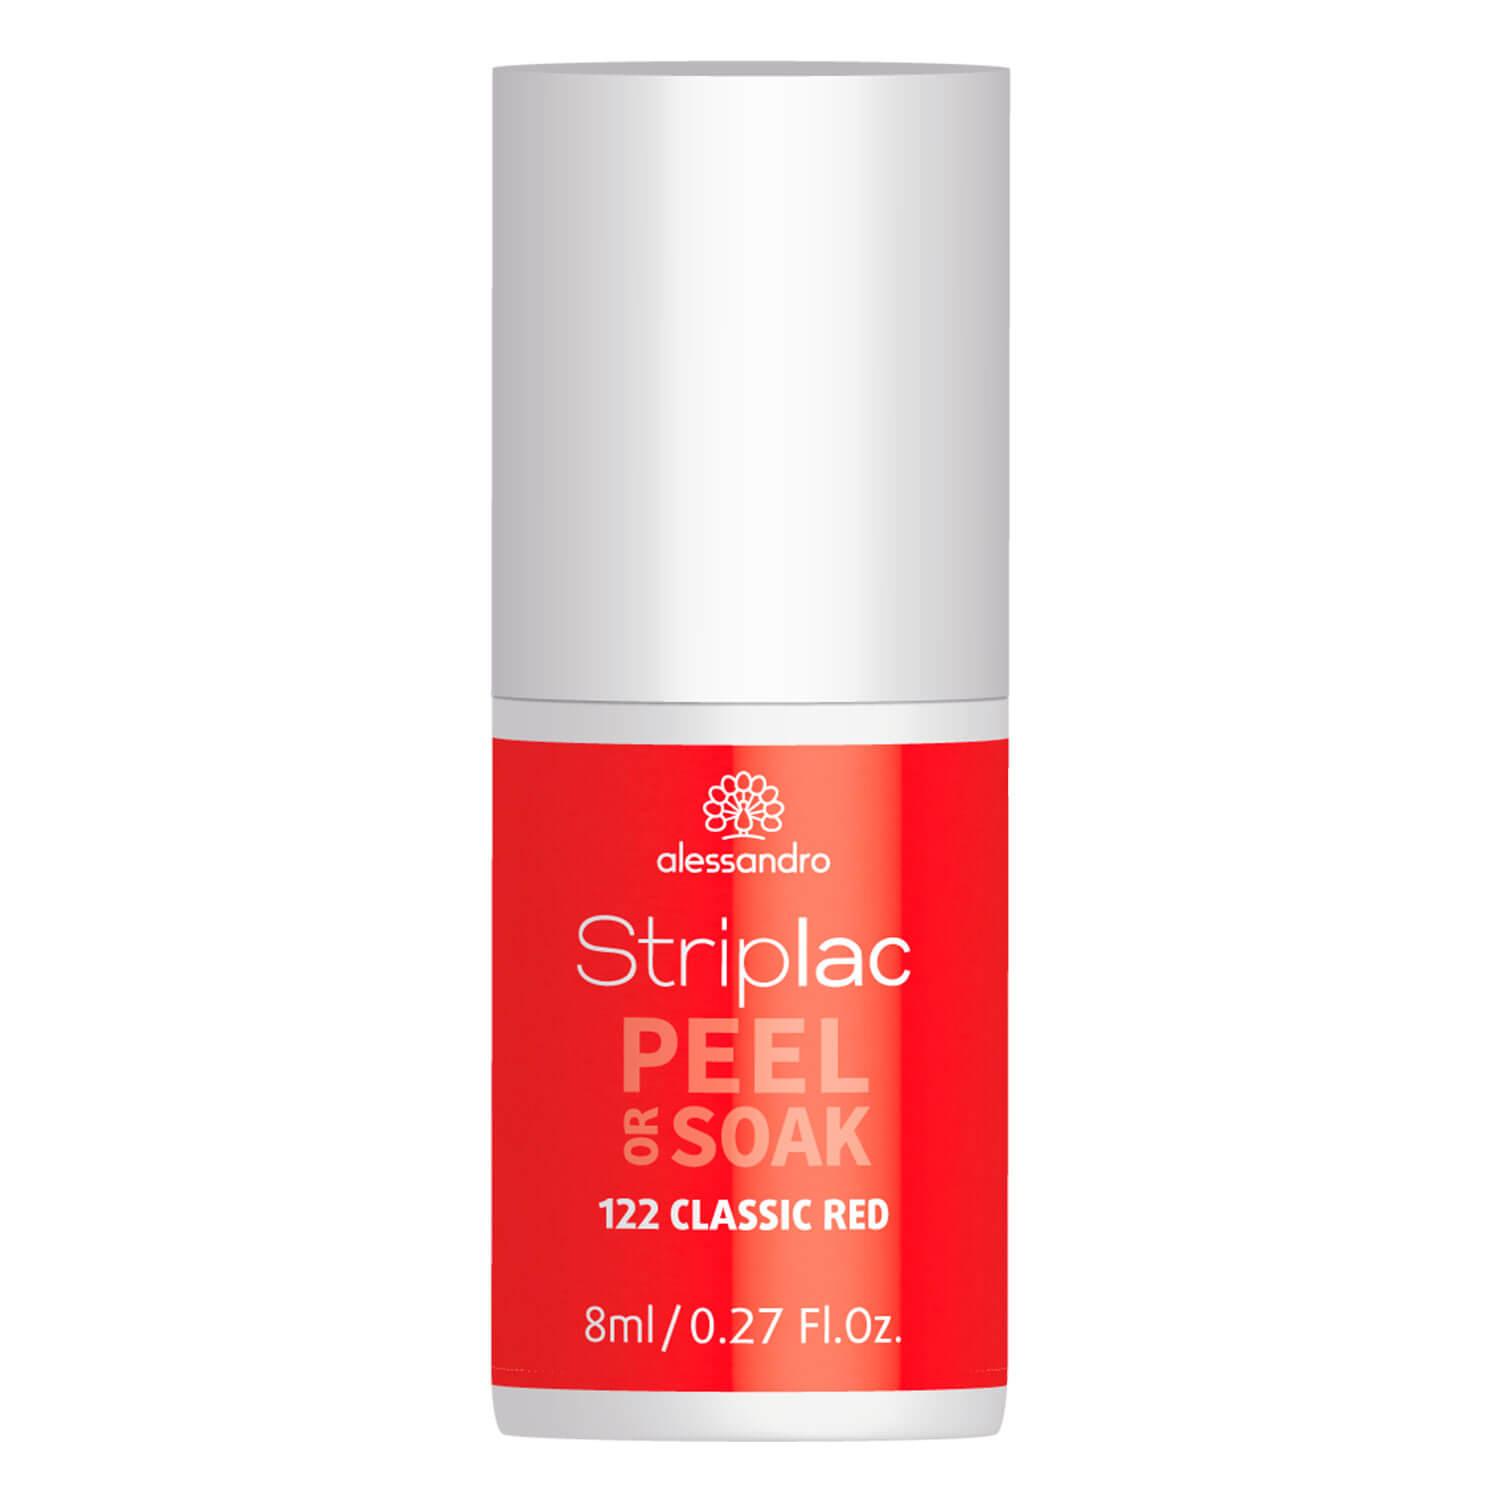 Striplac Peel or Soak - Classic Red